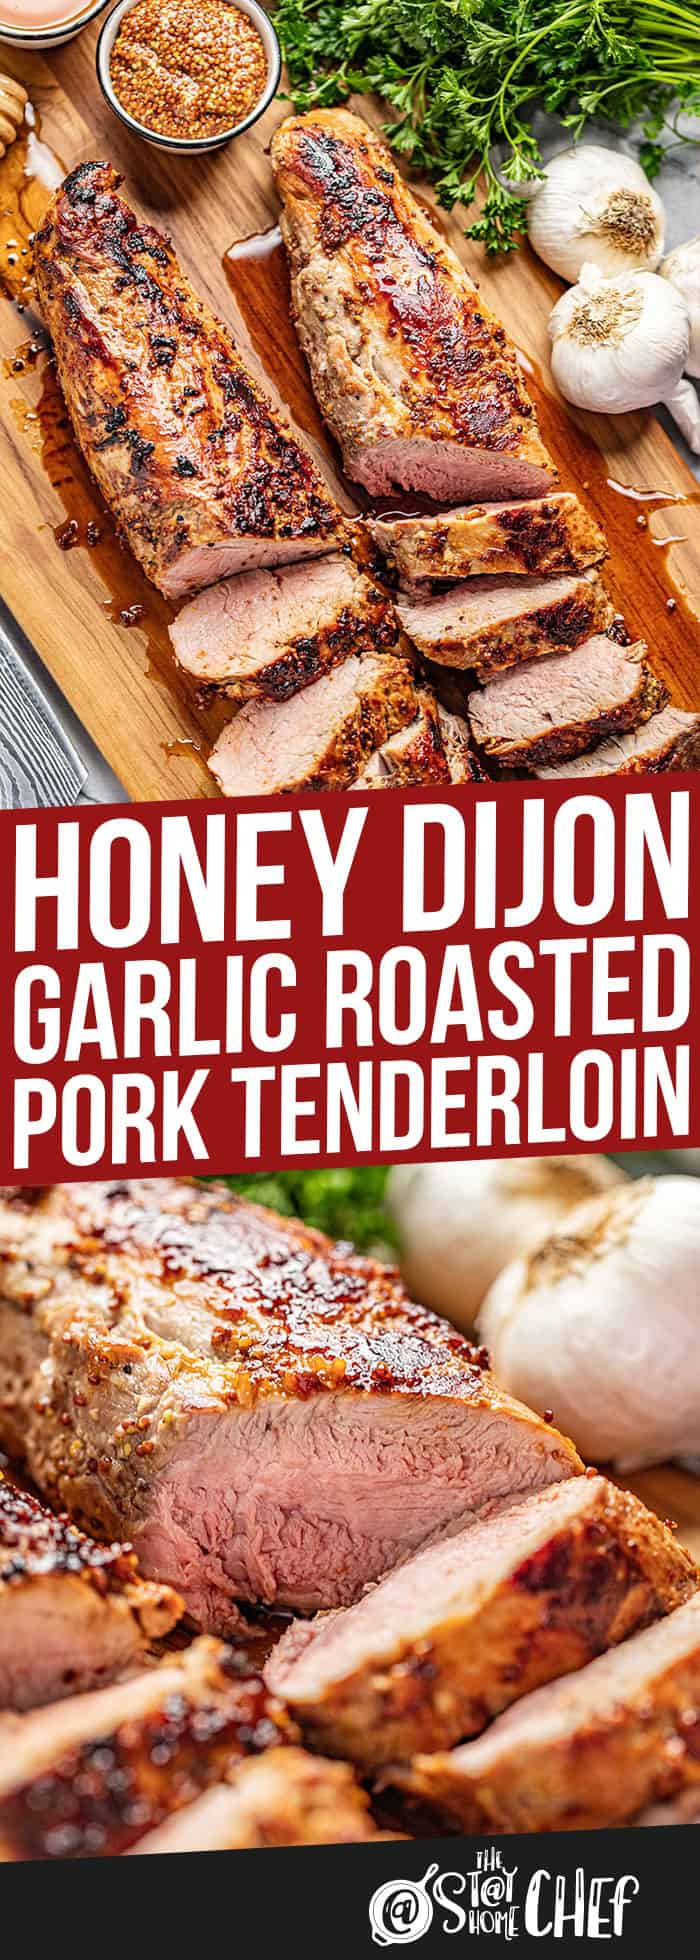 Honey Dijon Garlic Roasted Pork Tenderloin